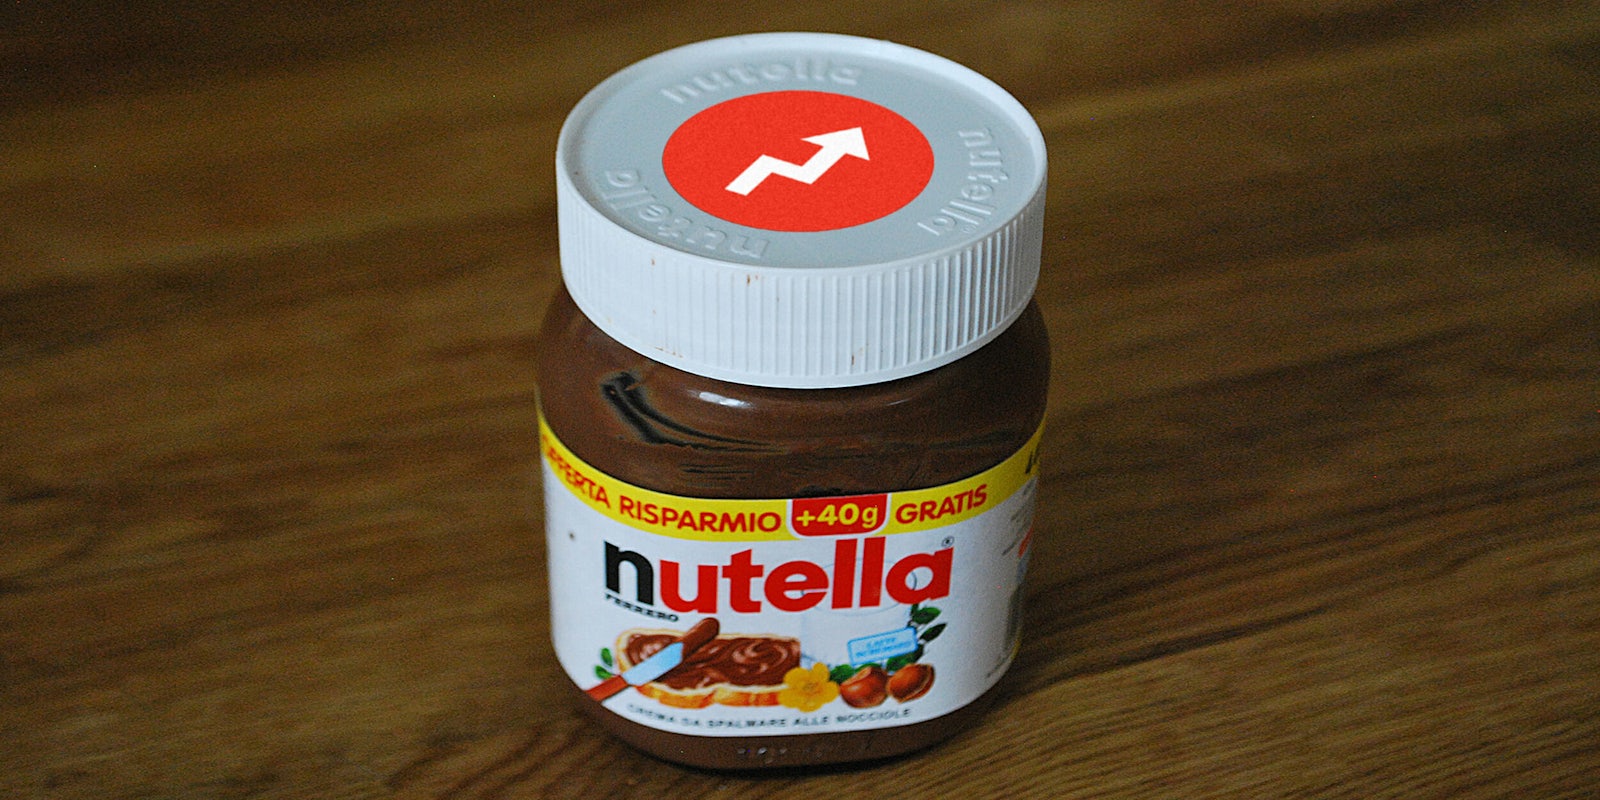 Nutella jar with Buzzfeed logo sticker on cap